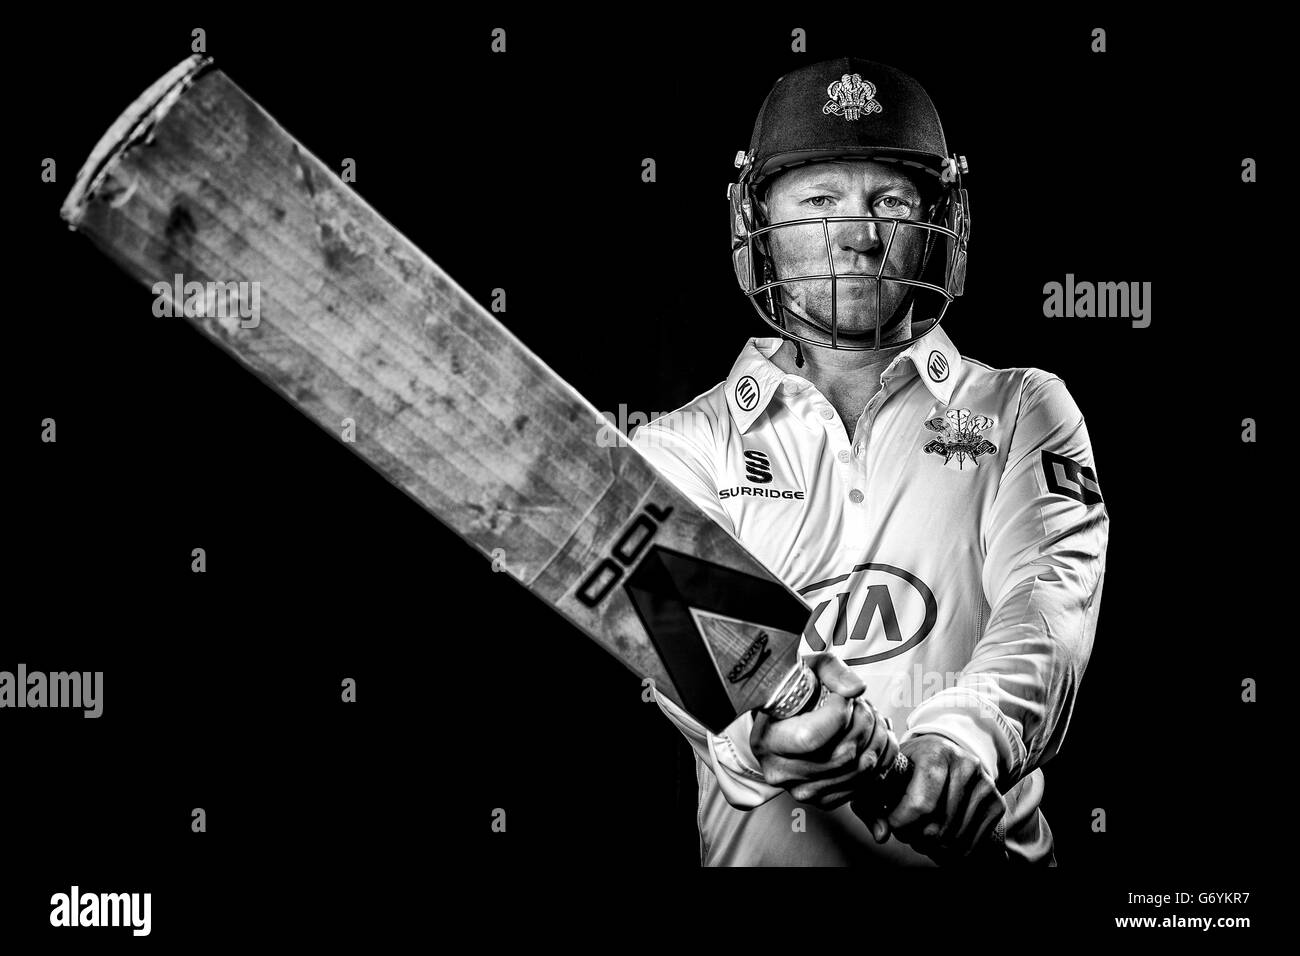 Cricket - Surrey County Cricket Club Squad Photocall 2014 - Kia Oval. Gareth Batty, Surrey Foto Stock